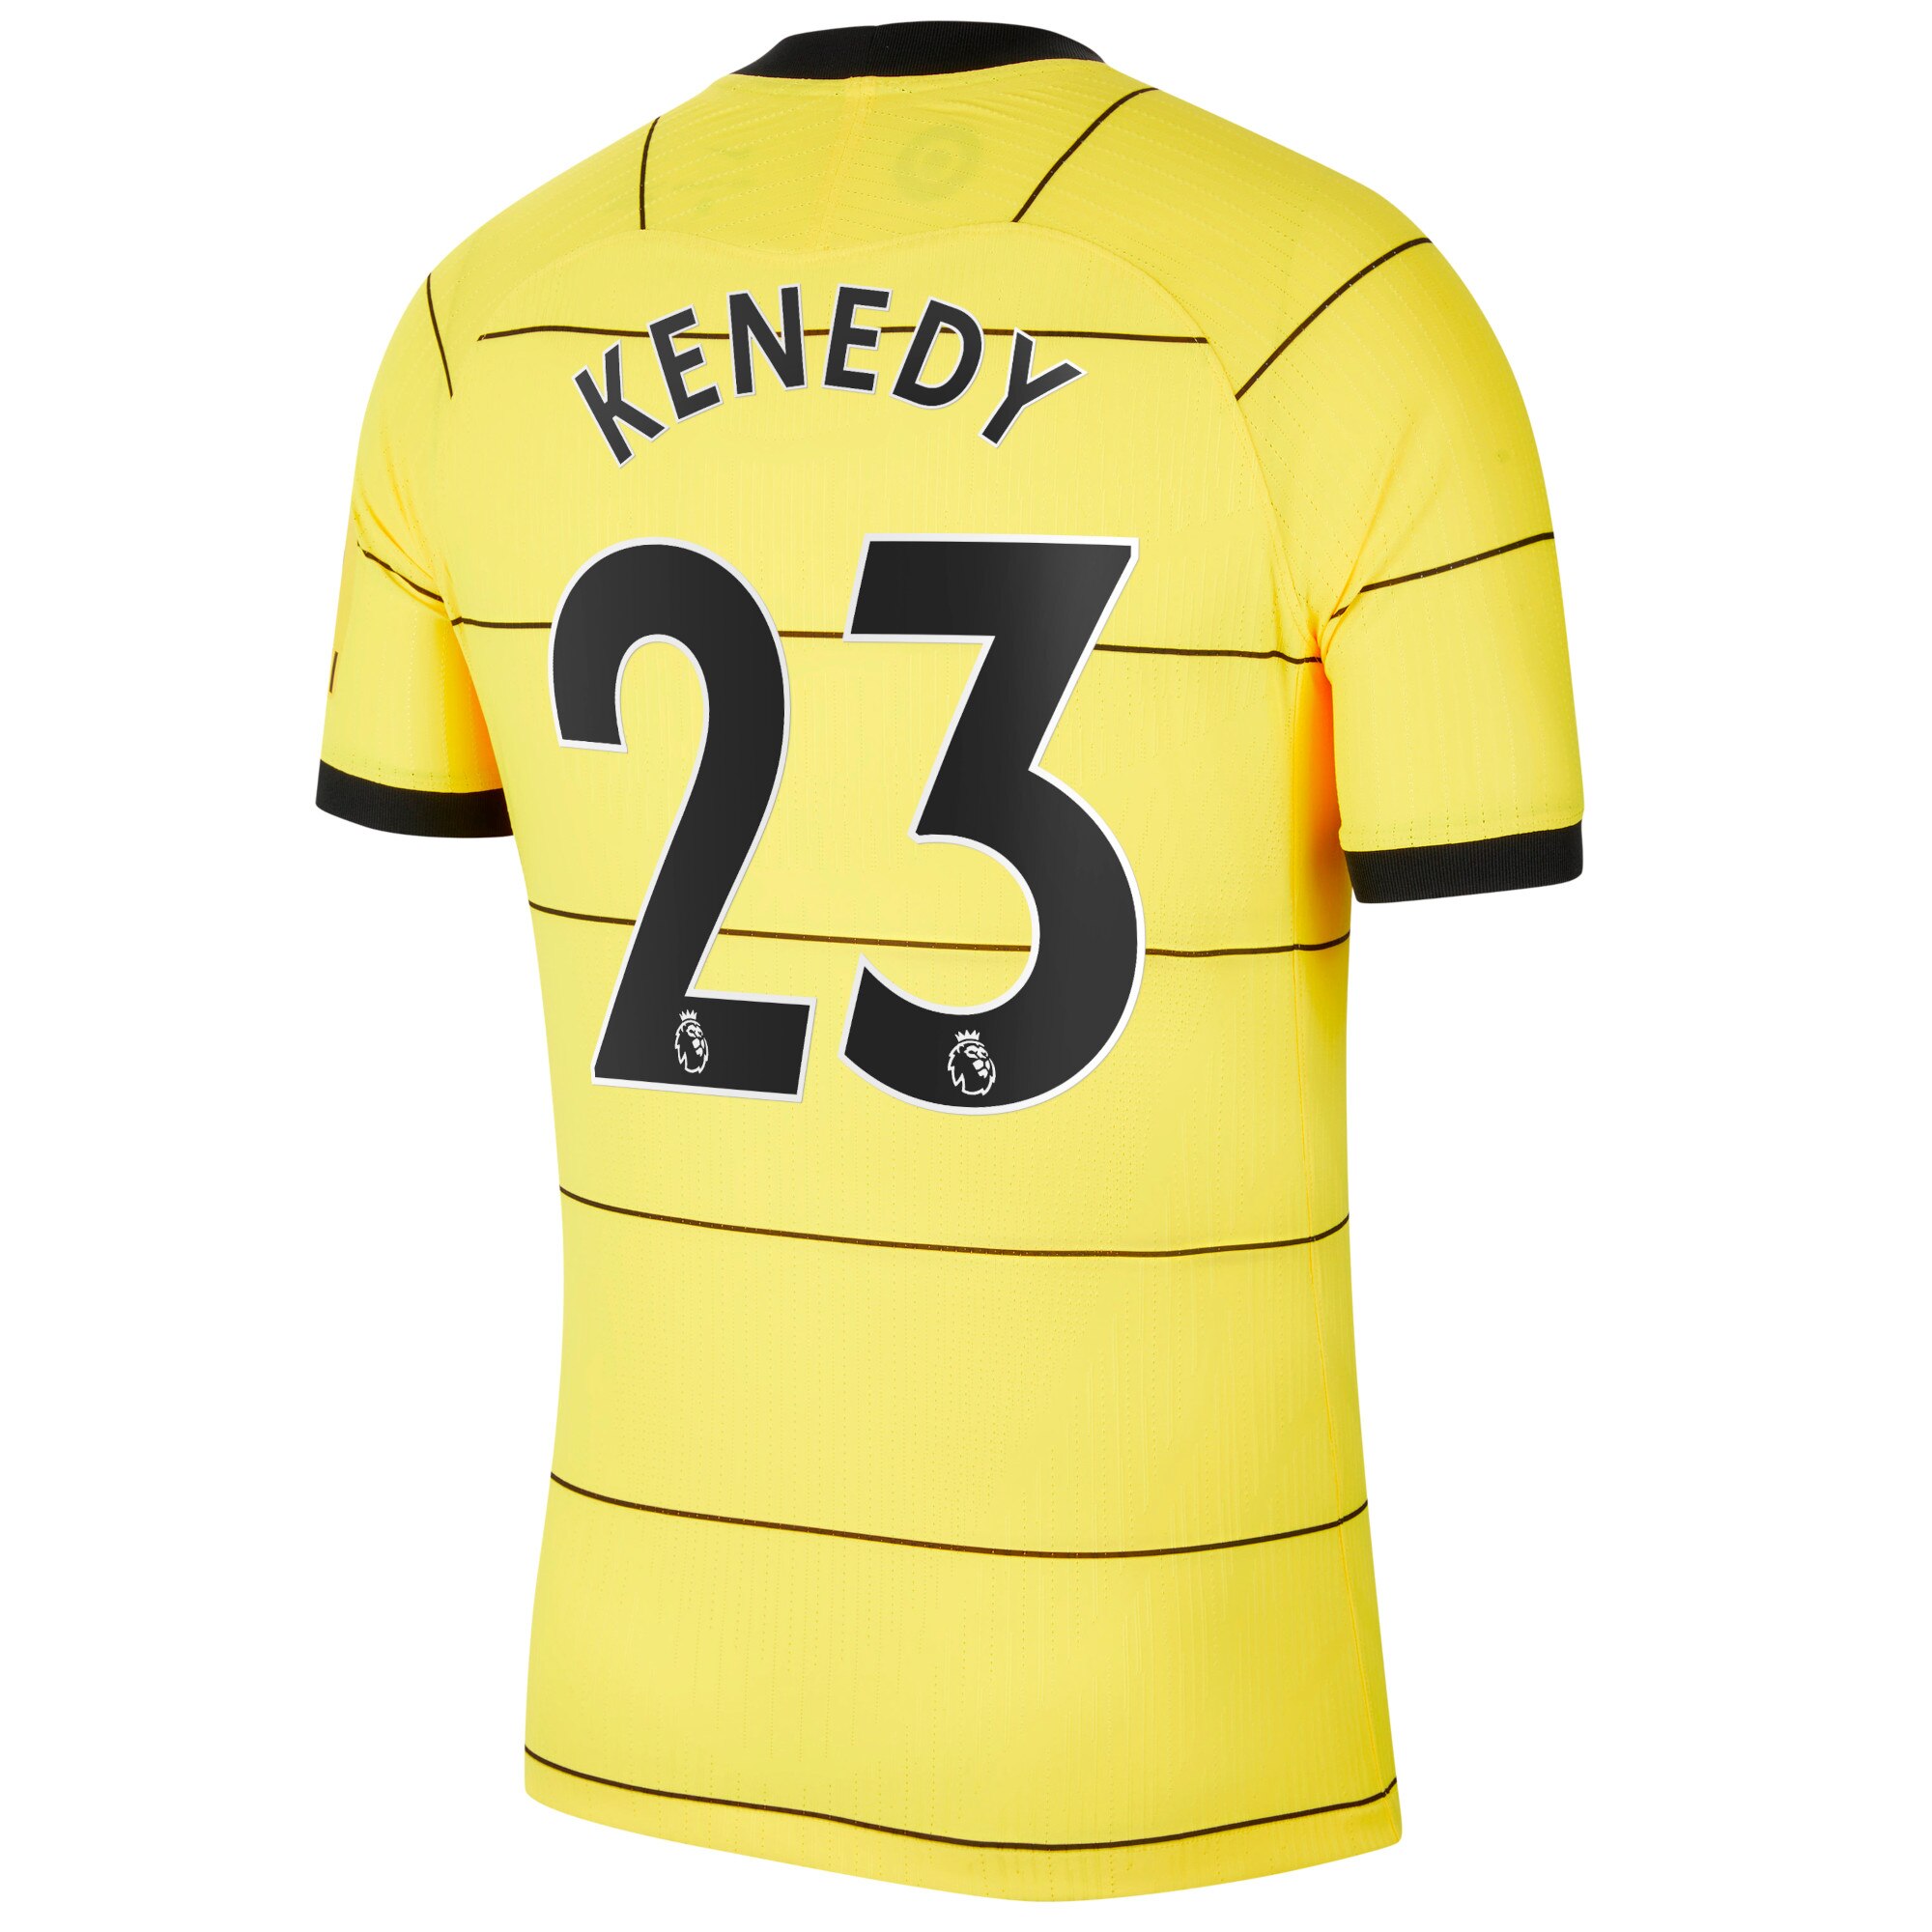 Chelsea Away Vapor Match Shirt 2021-22 with Kenedy 23 printing